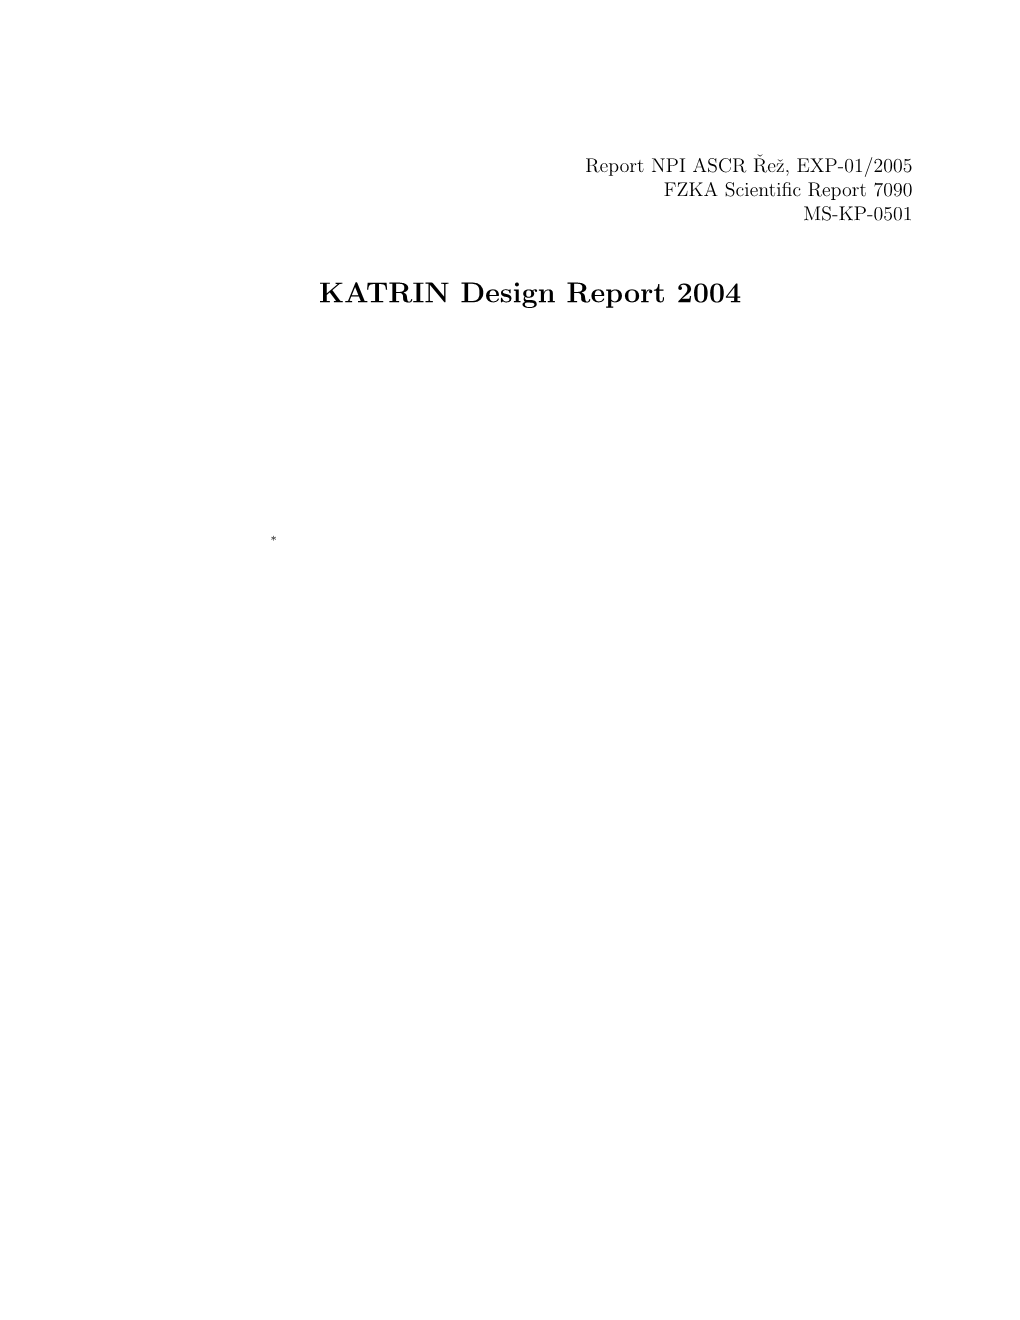 KATRIN Design Report 2004